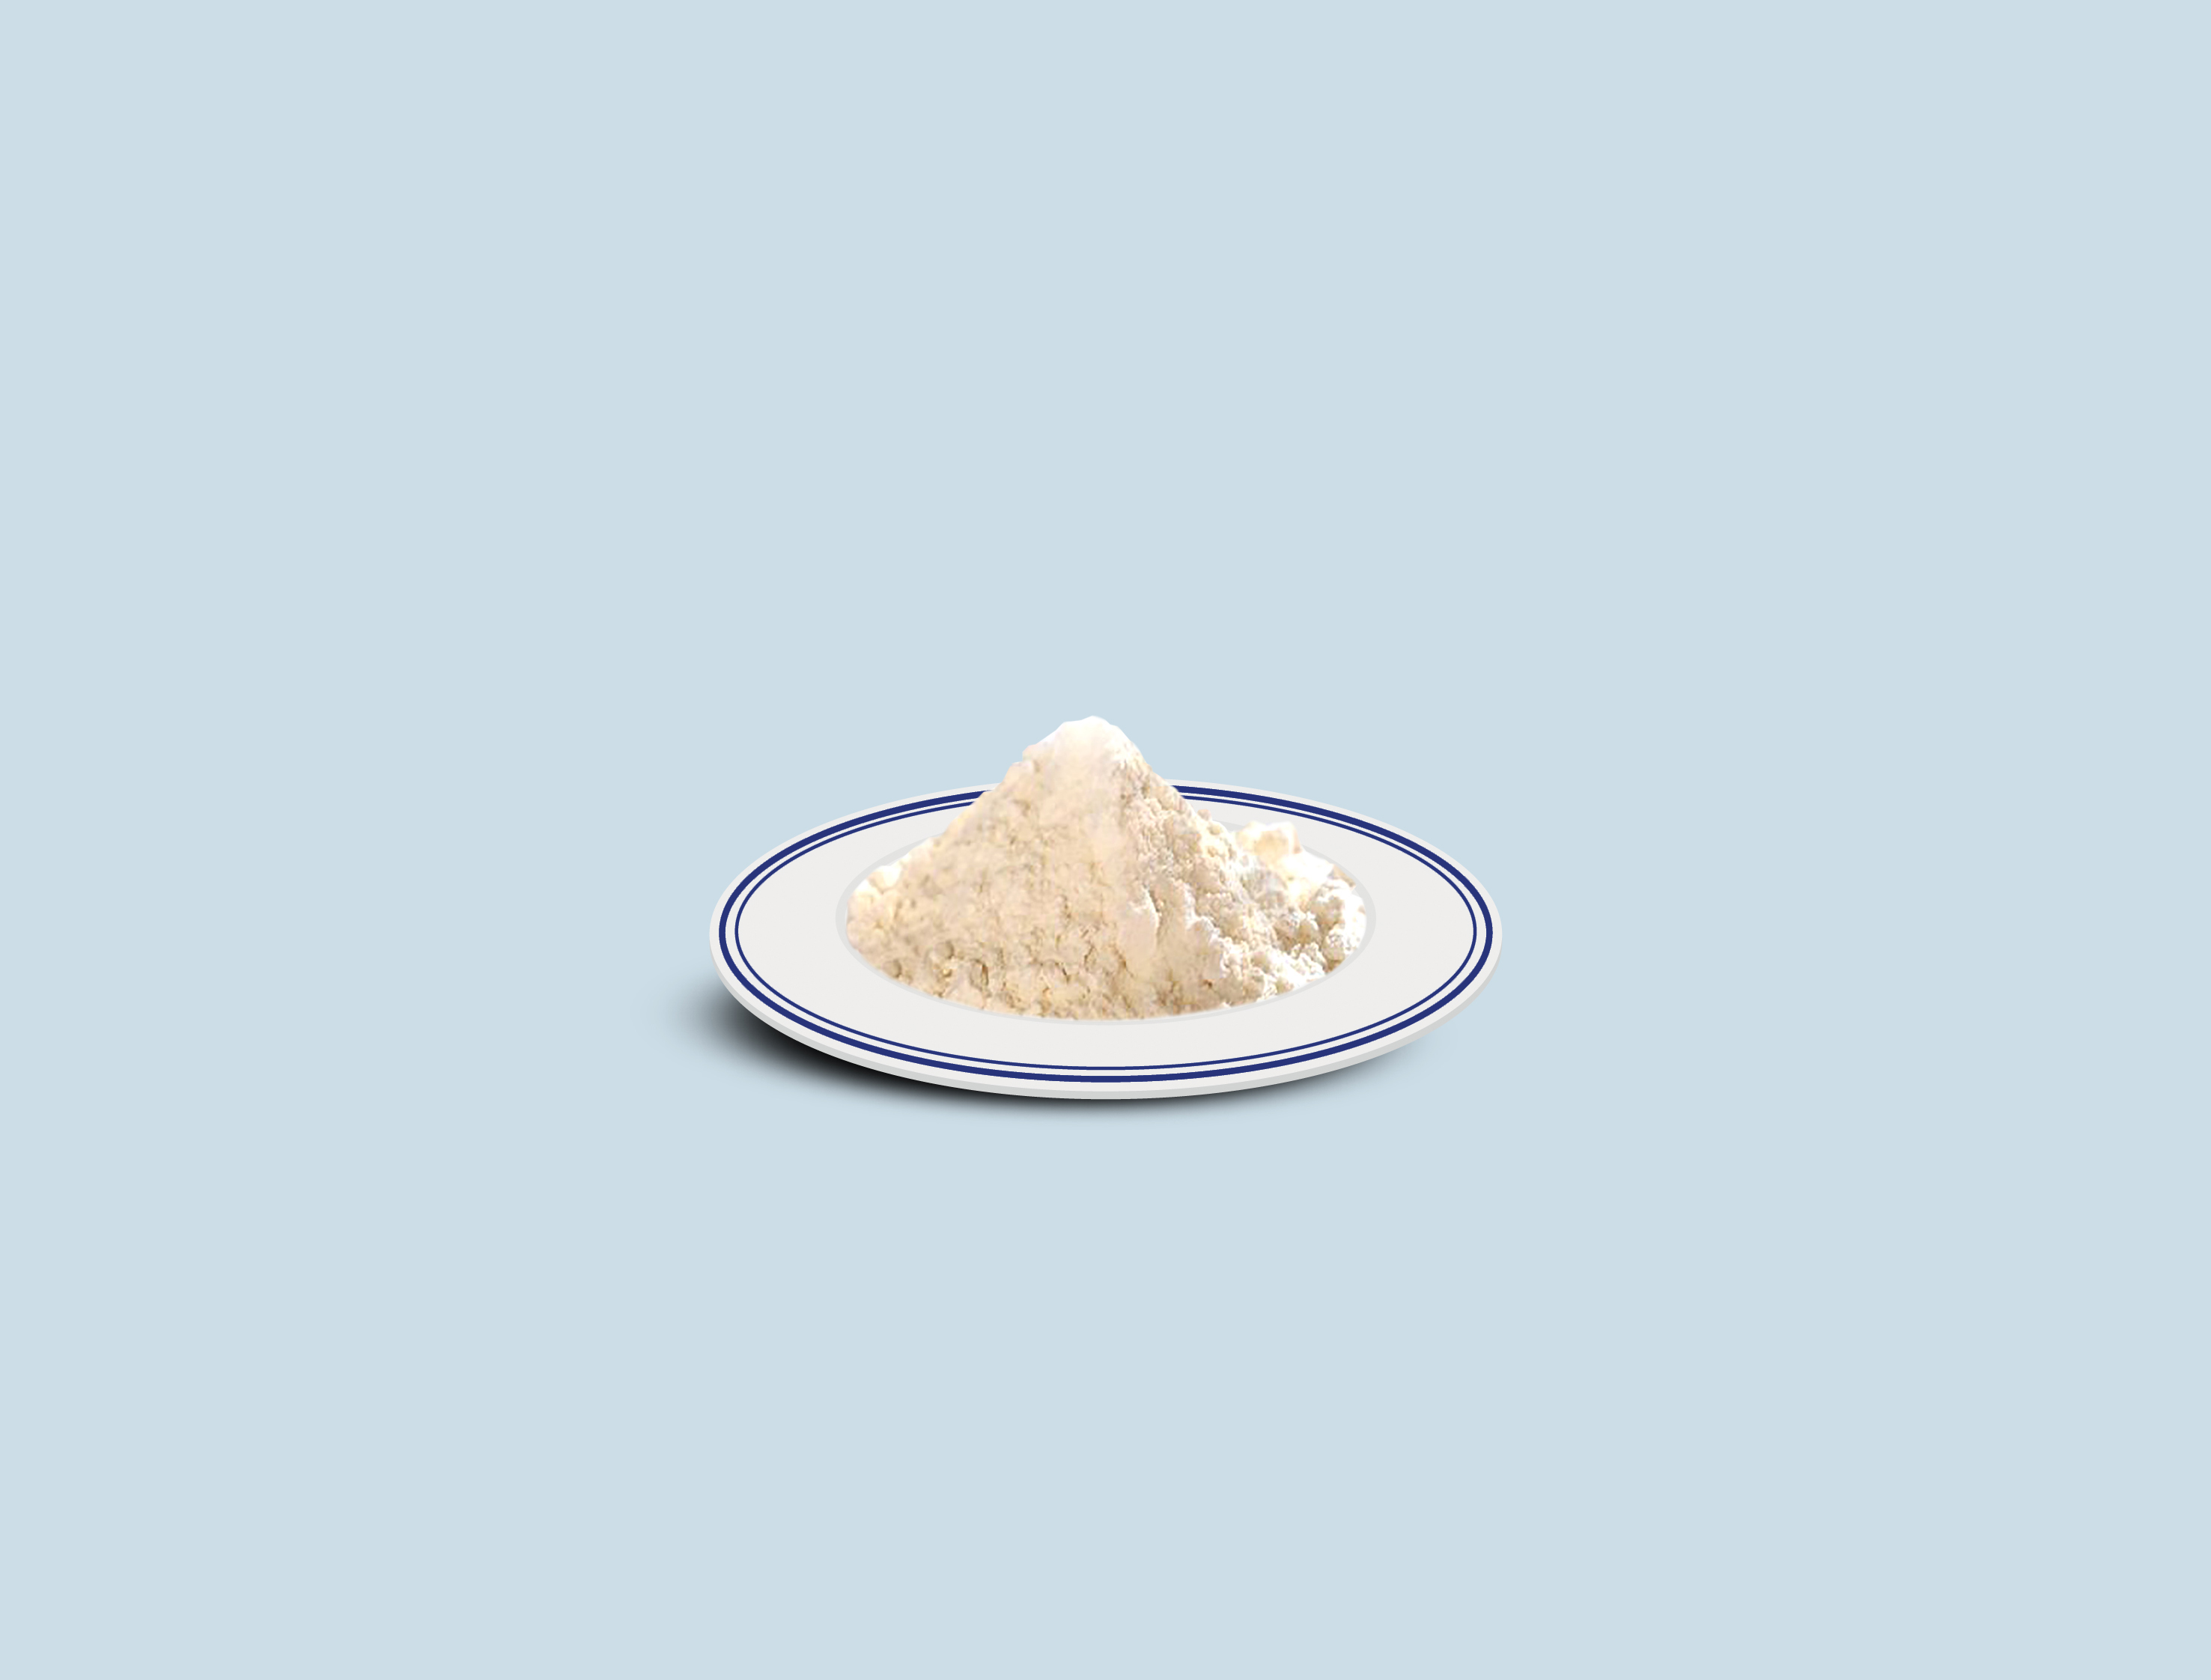 B-Whey protein powder